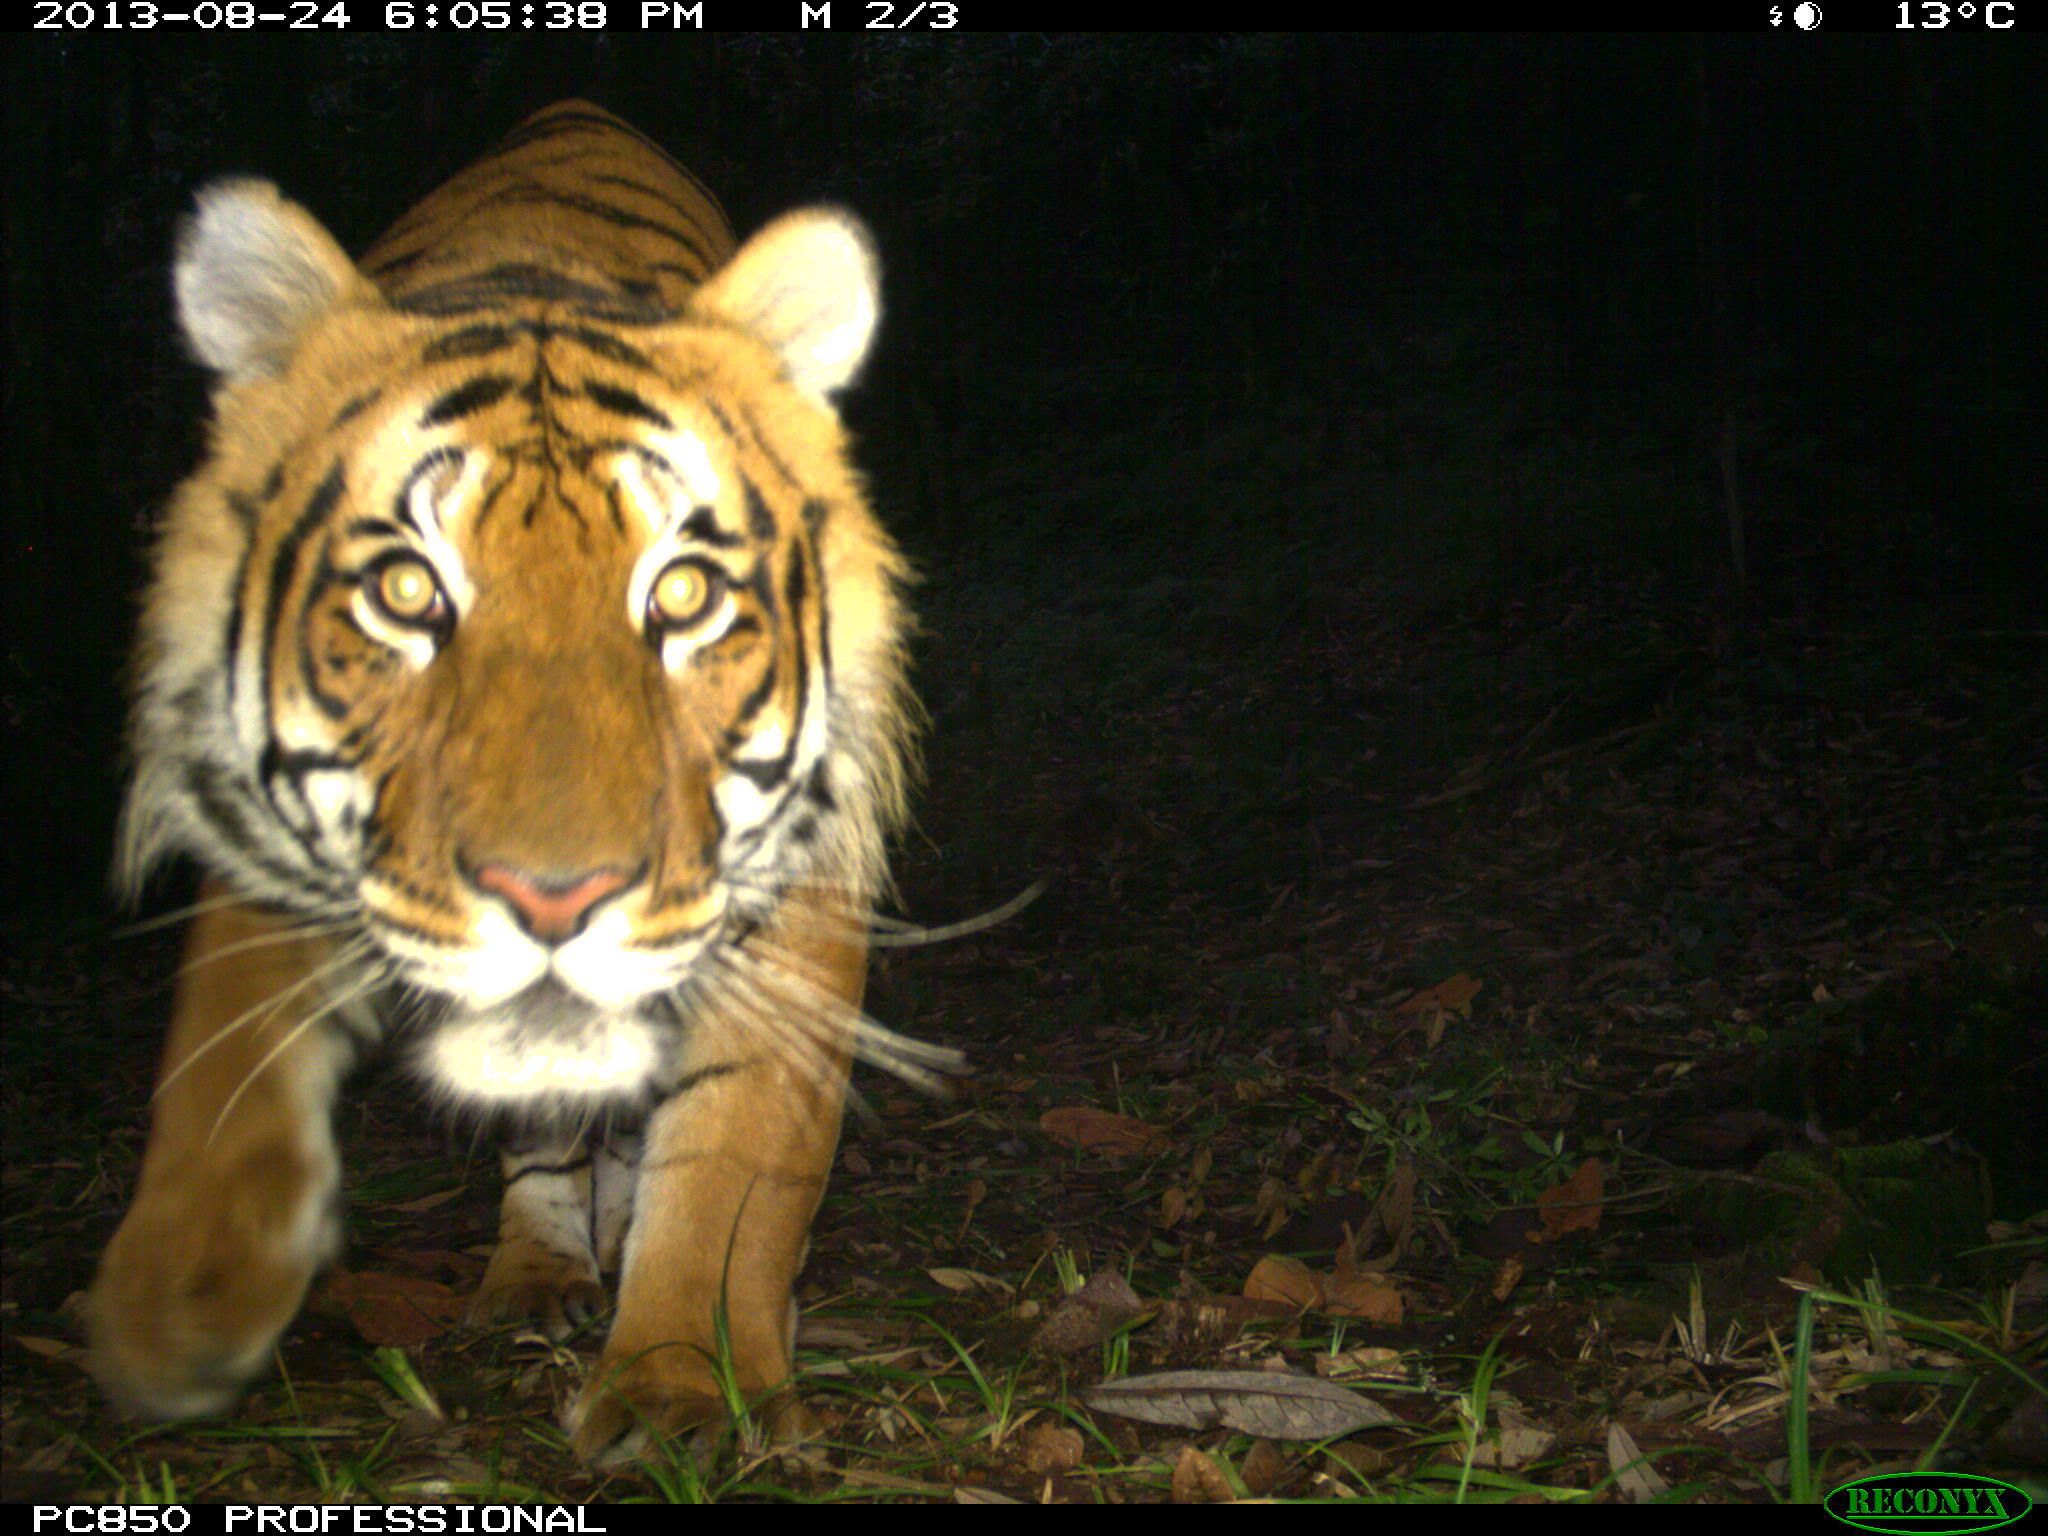 Bhutan tiger on camera trap